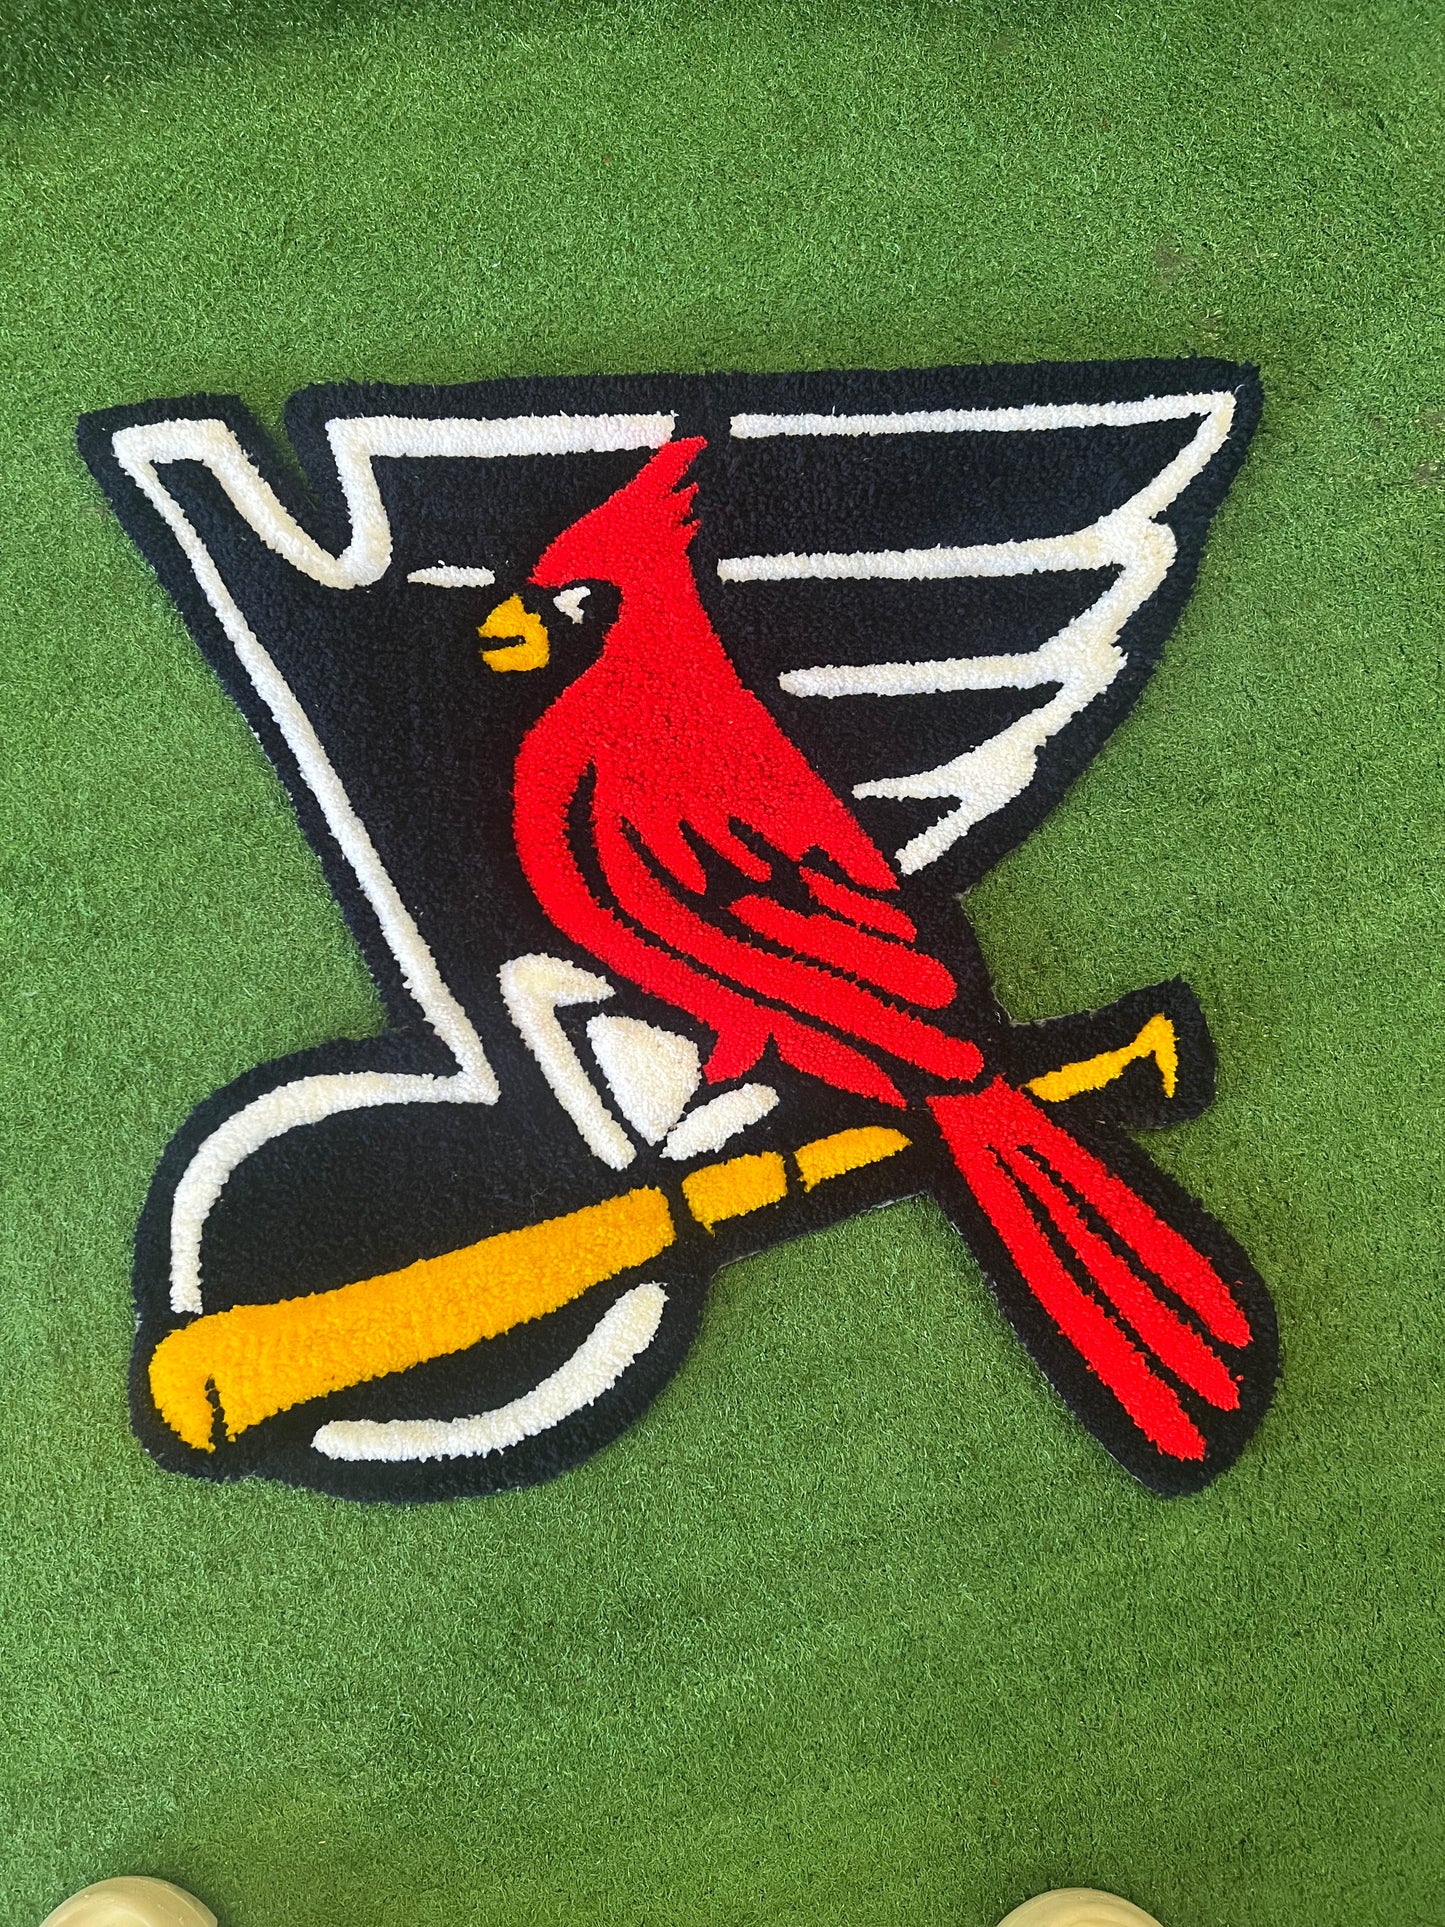 St. Louis Cardinals/Blues Rug